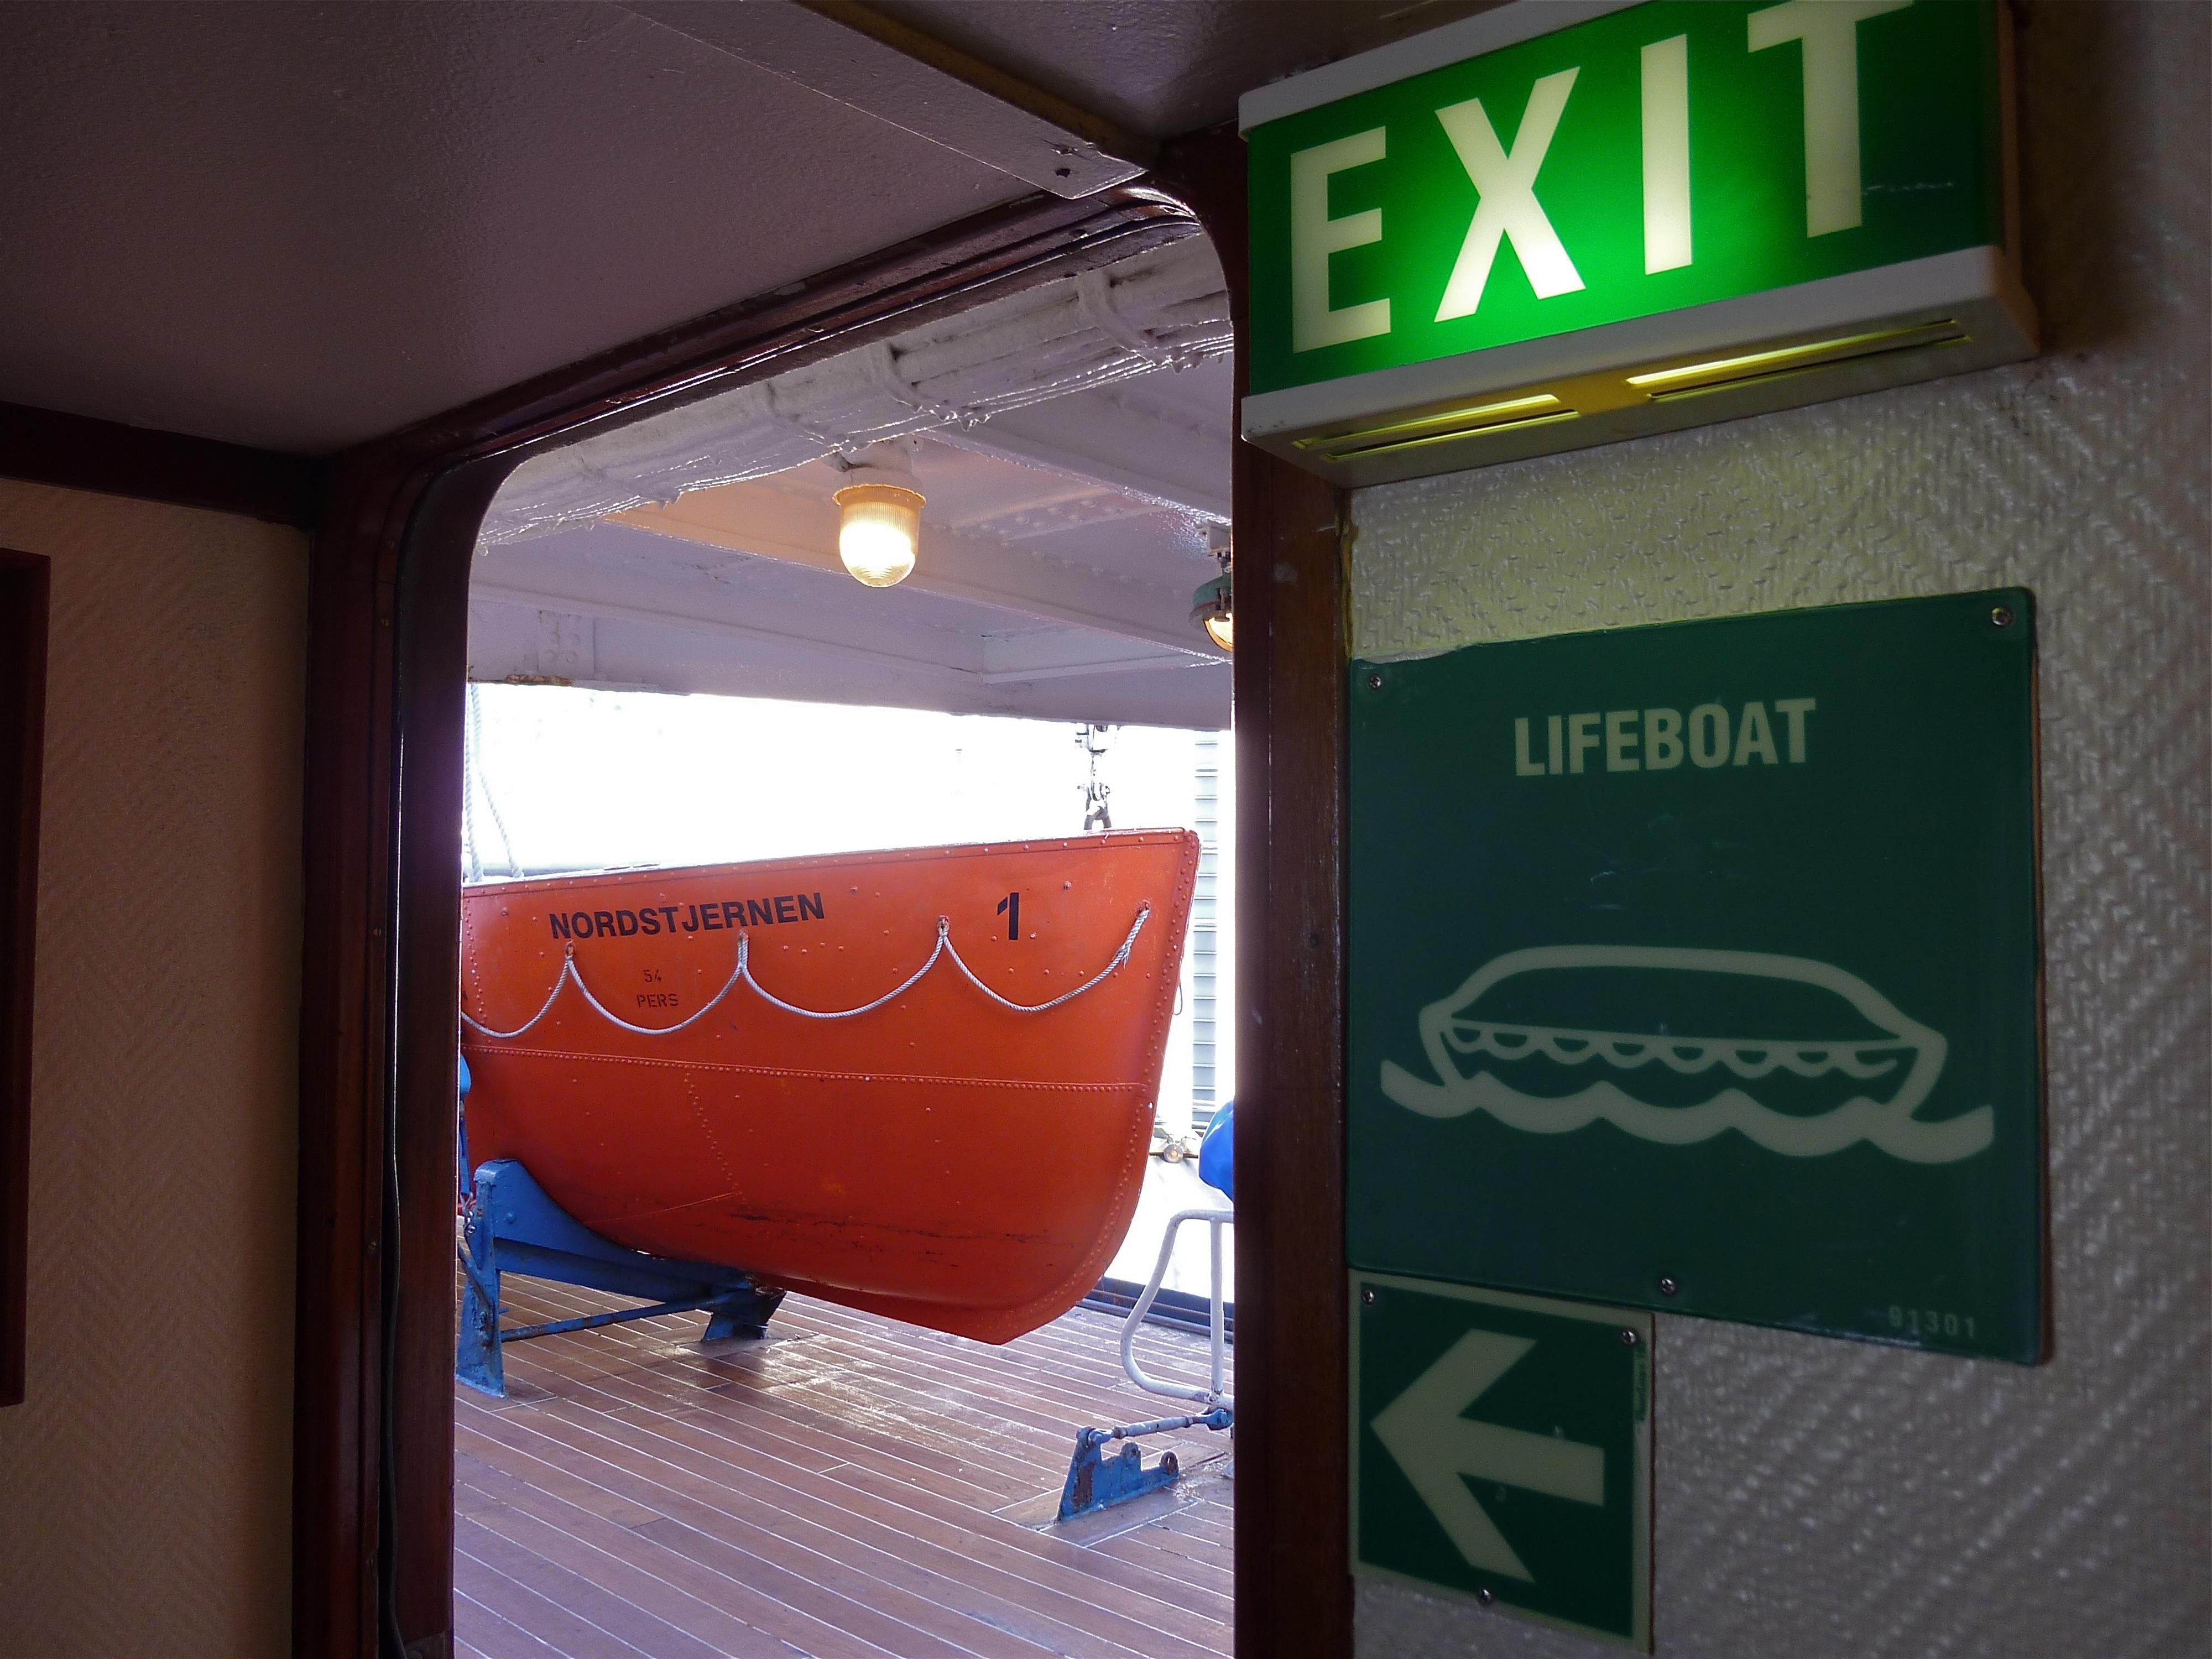 A lifeboat aboard the Nordstjernen